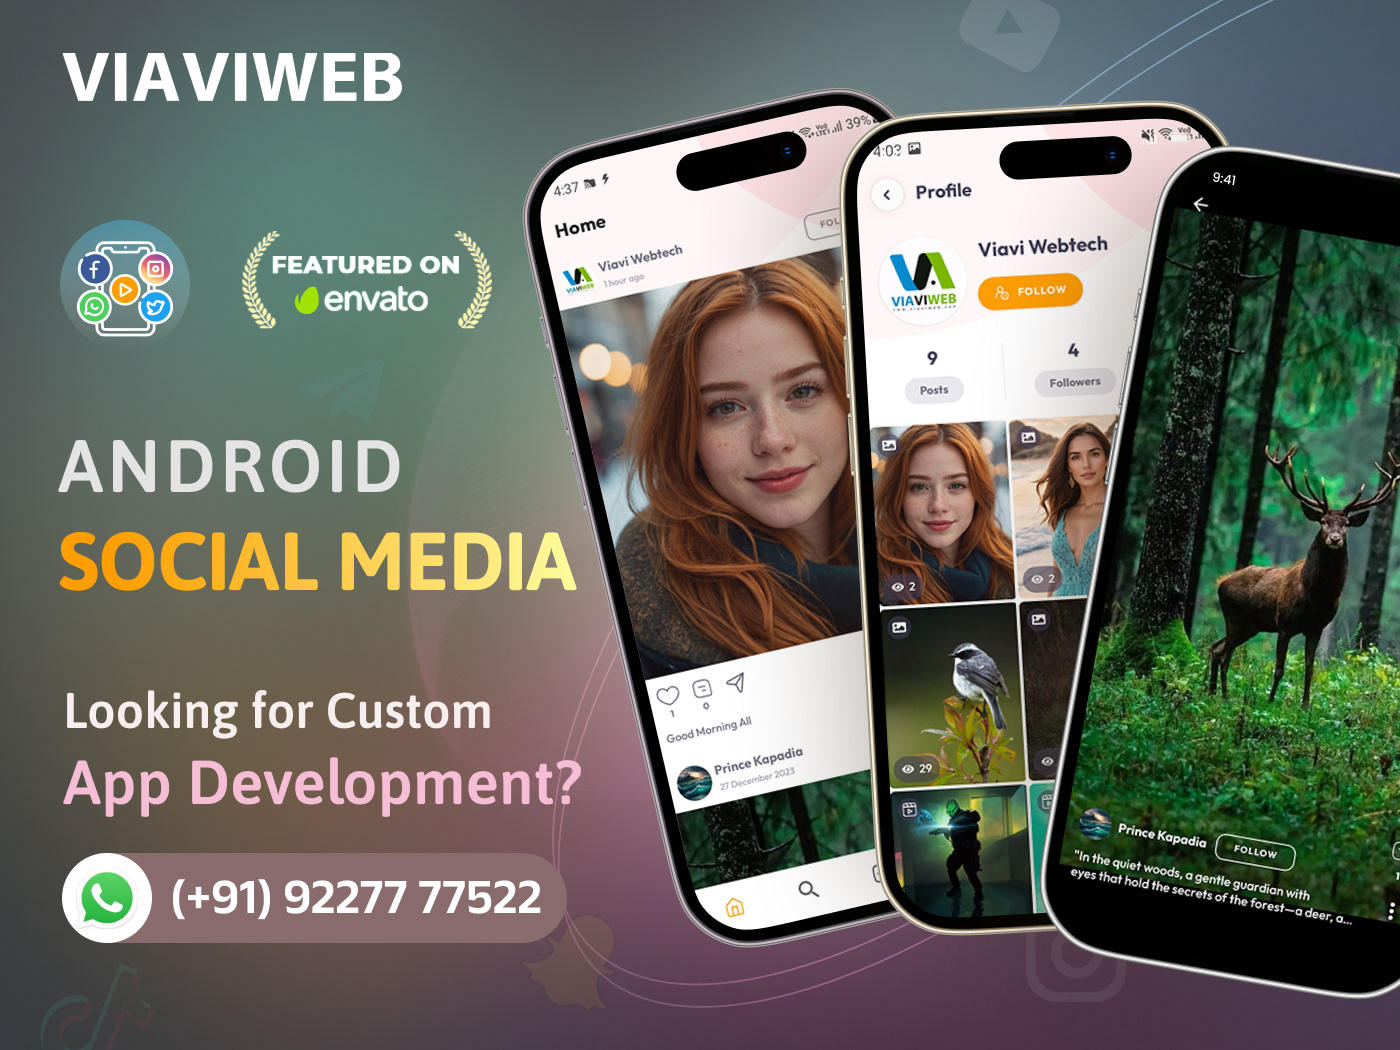 website development codecanyon viaviweb Android App Development android native app envato market Laravel Framework viaviwebtech